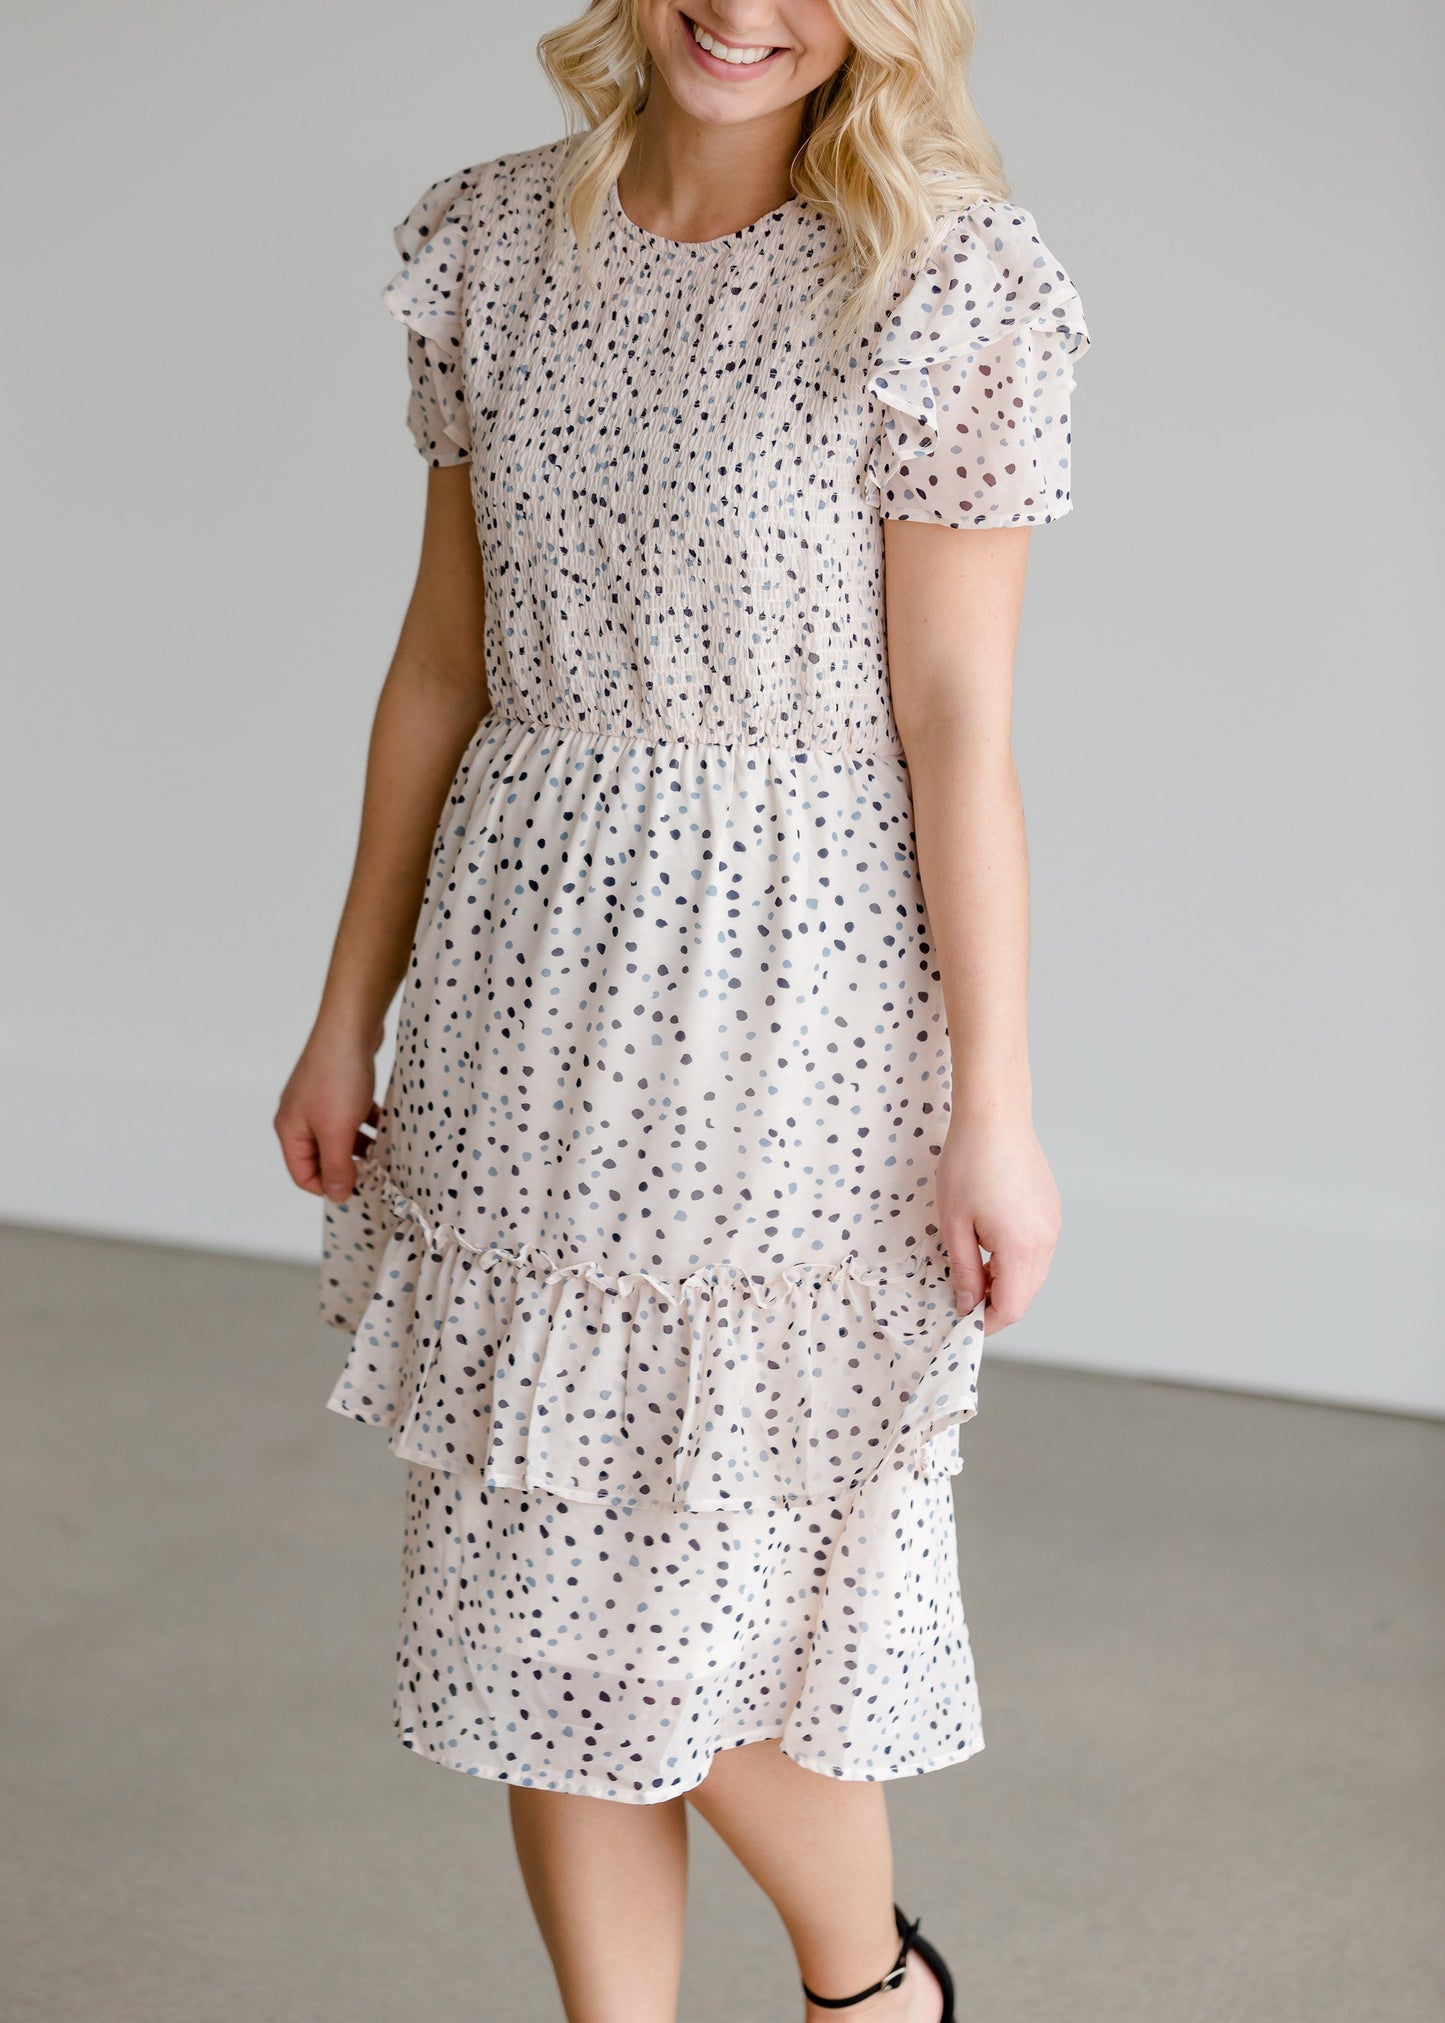 Smocked Ruffle Midi Dress - FINAL SALE Dresses